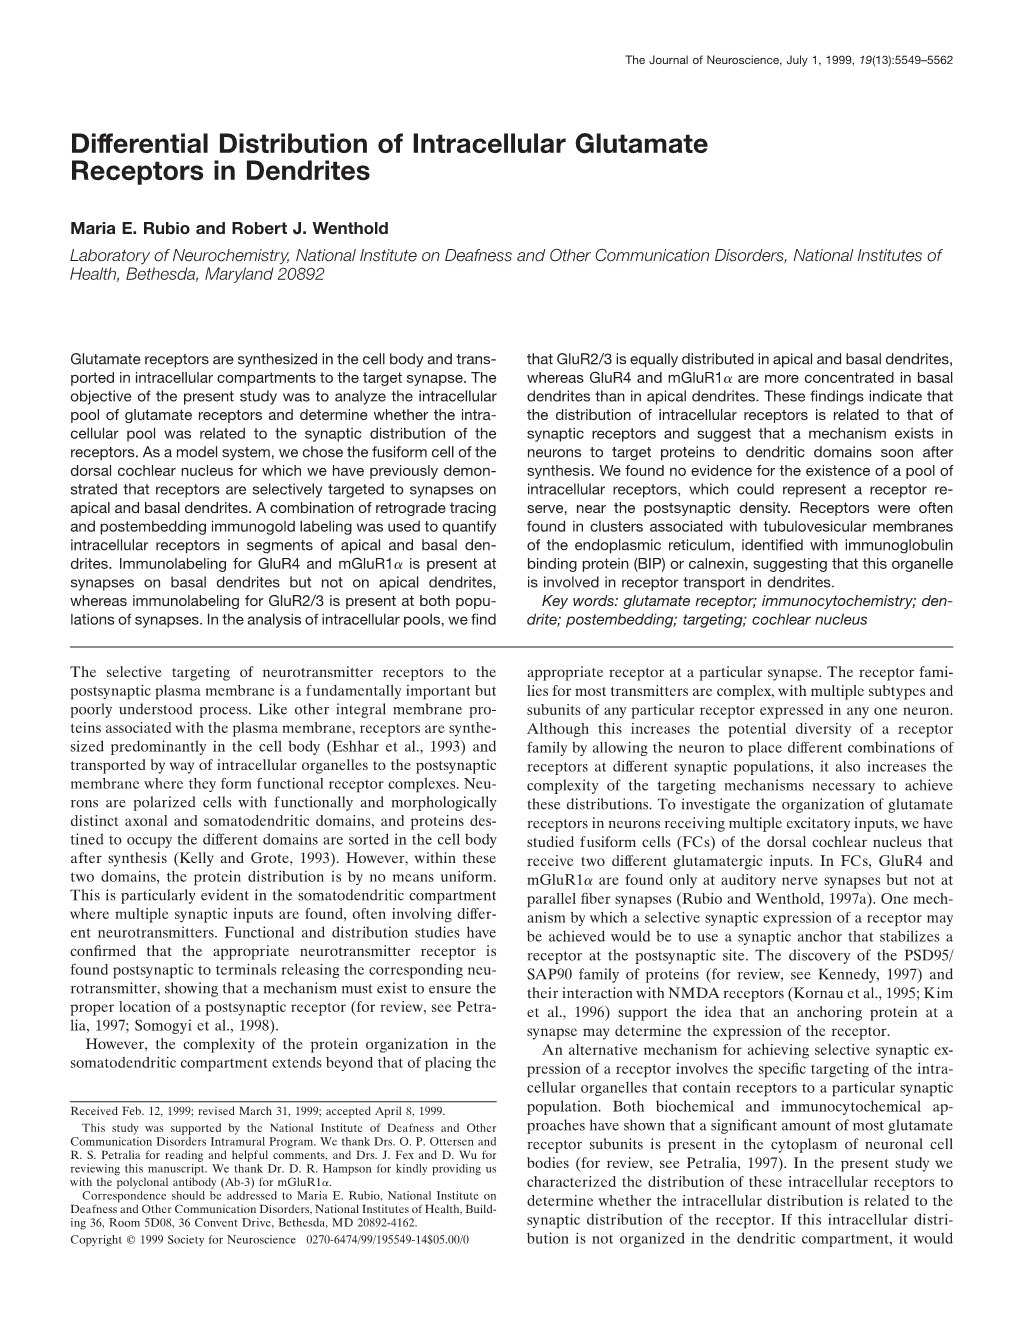 Differential Distribution of Intracellular Glutamate Receptors in Dendrites